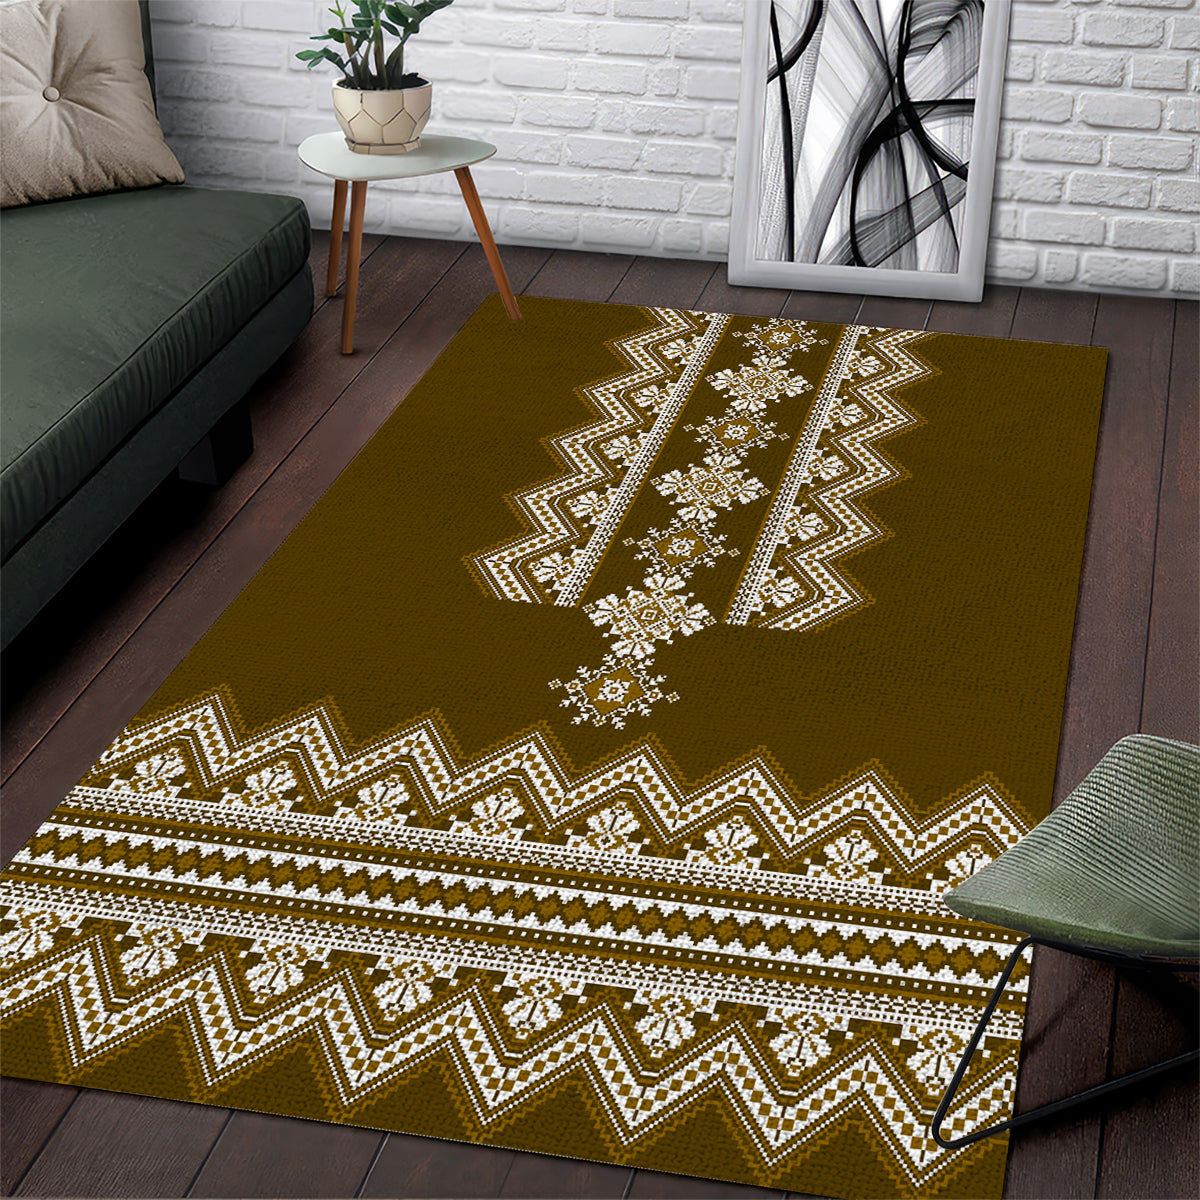 ukraine-folk-pattern-area-rug-ukrainian-wood-brown-version